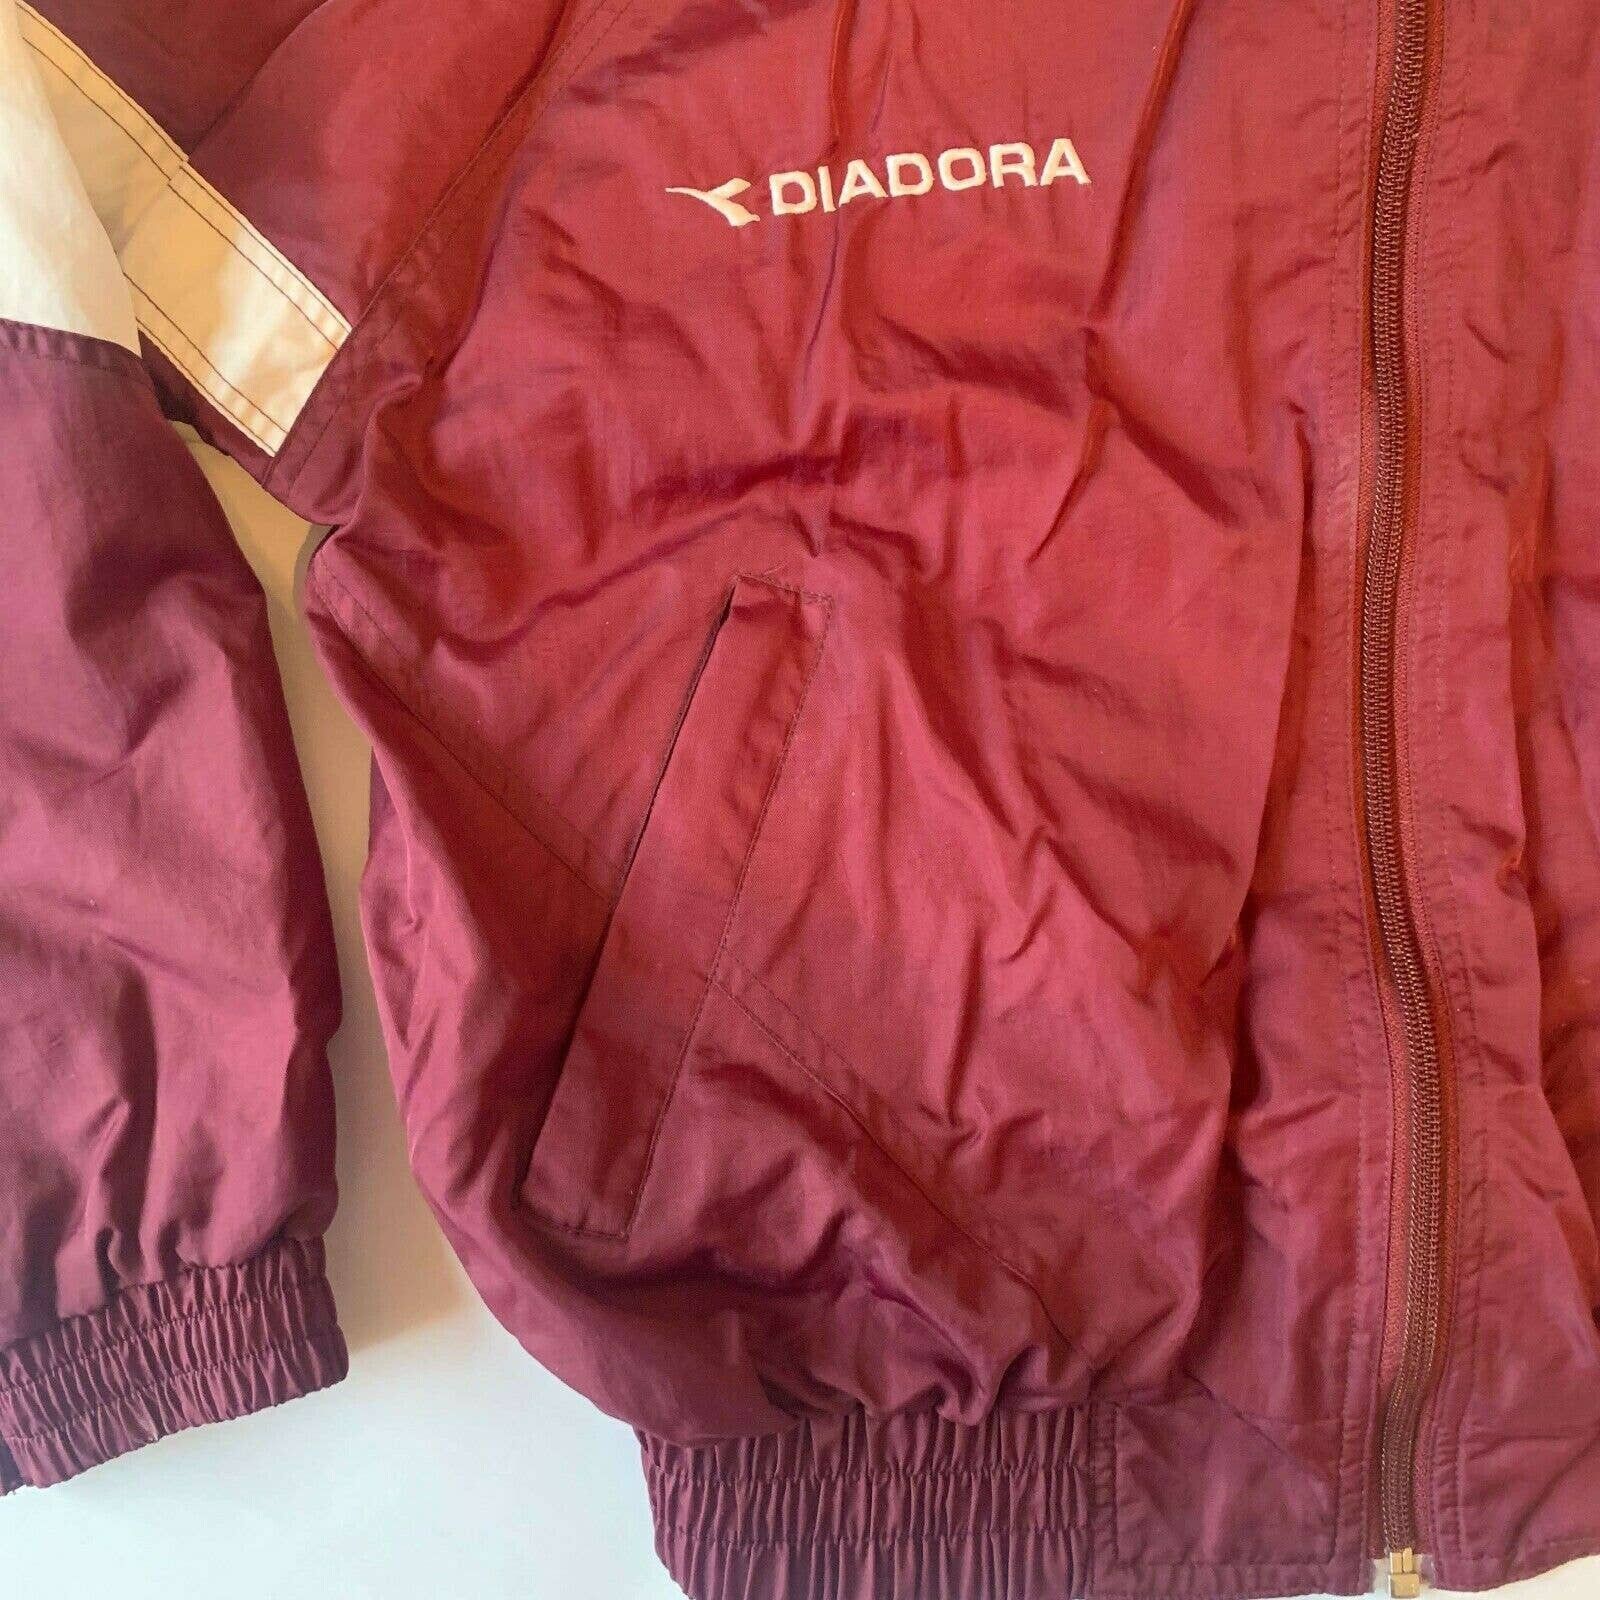 Diadora DIADORA Vintage 1980s 90s Tracksuit Jacket Top Size US S / EU 44-46 / 1 - 5 Thumbnail